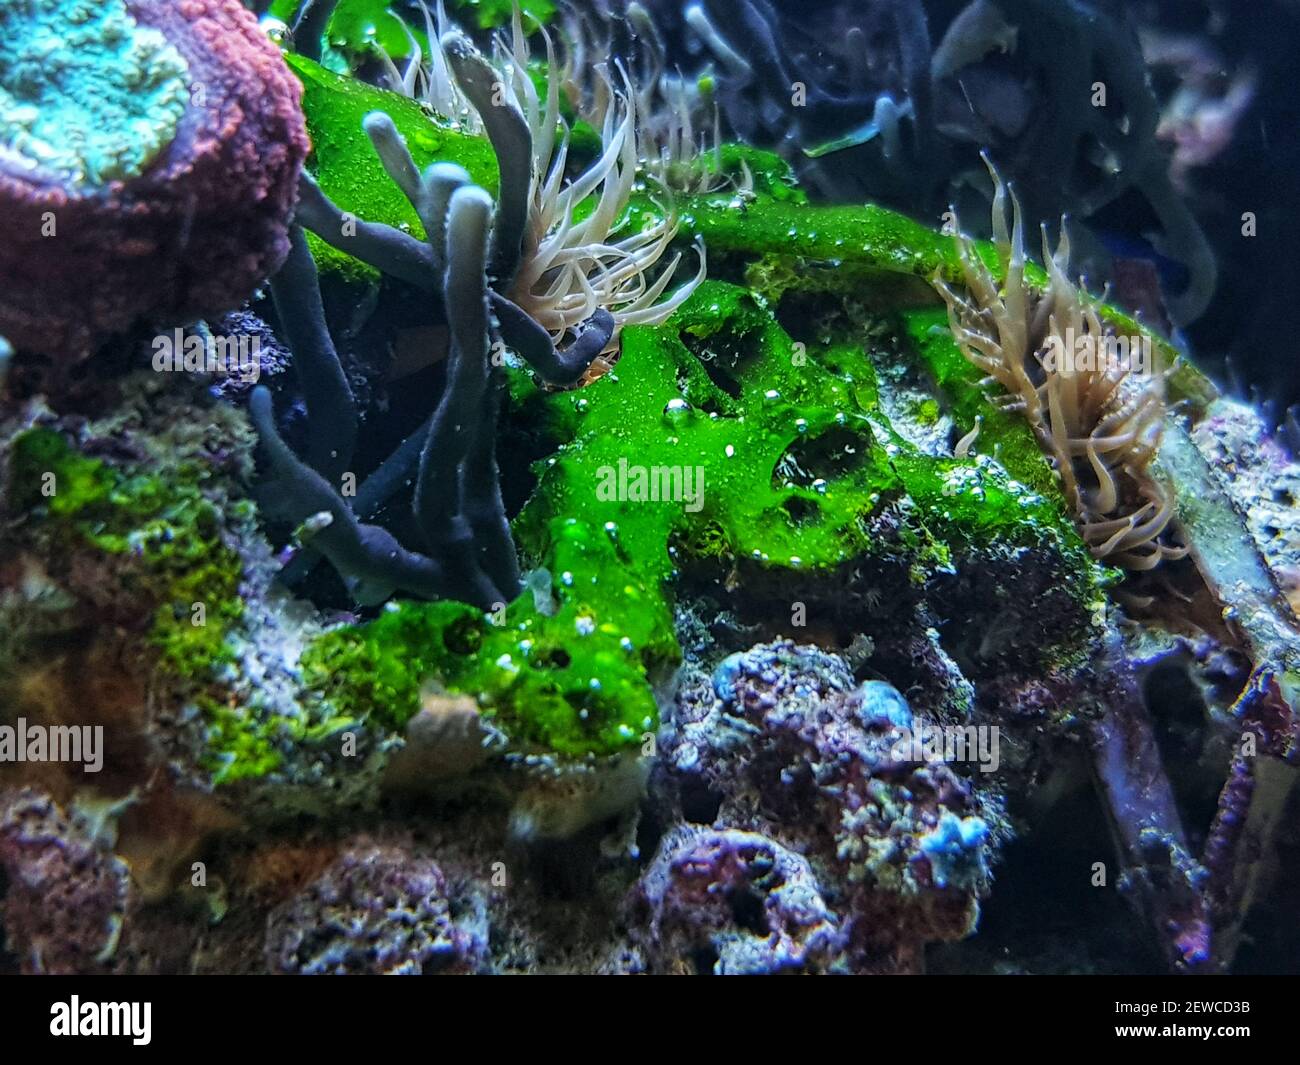 Green cyanobacteria attached on the rock in reef aquarium tank Stock Photo